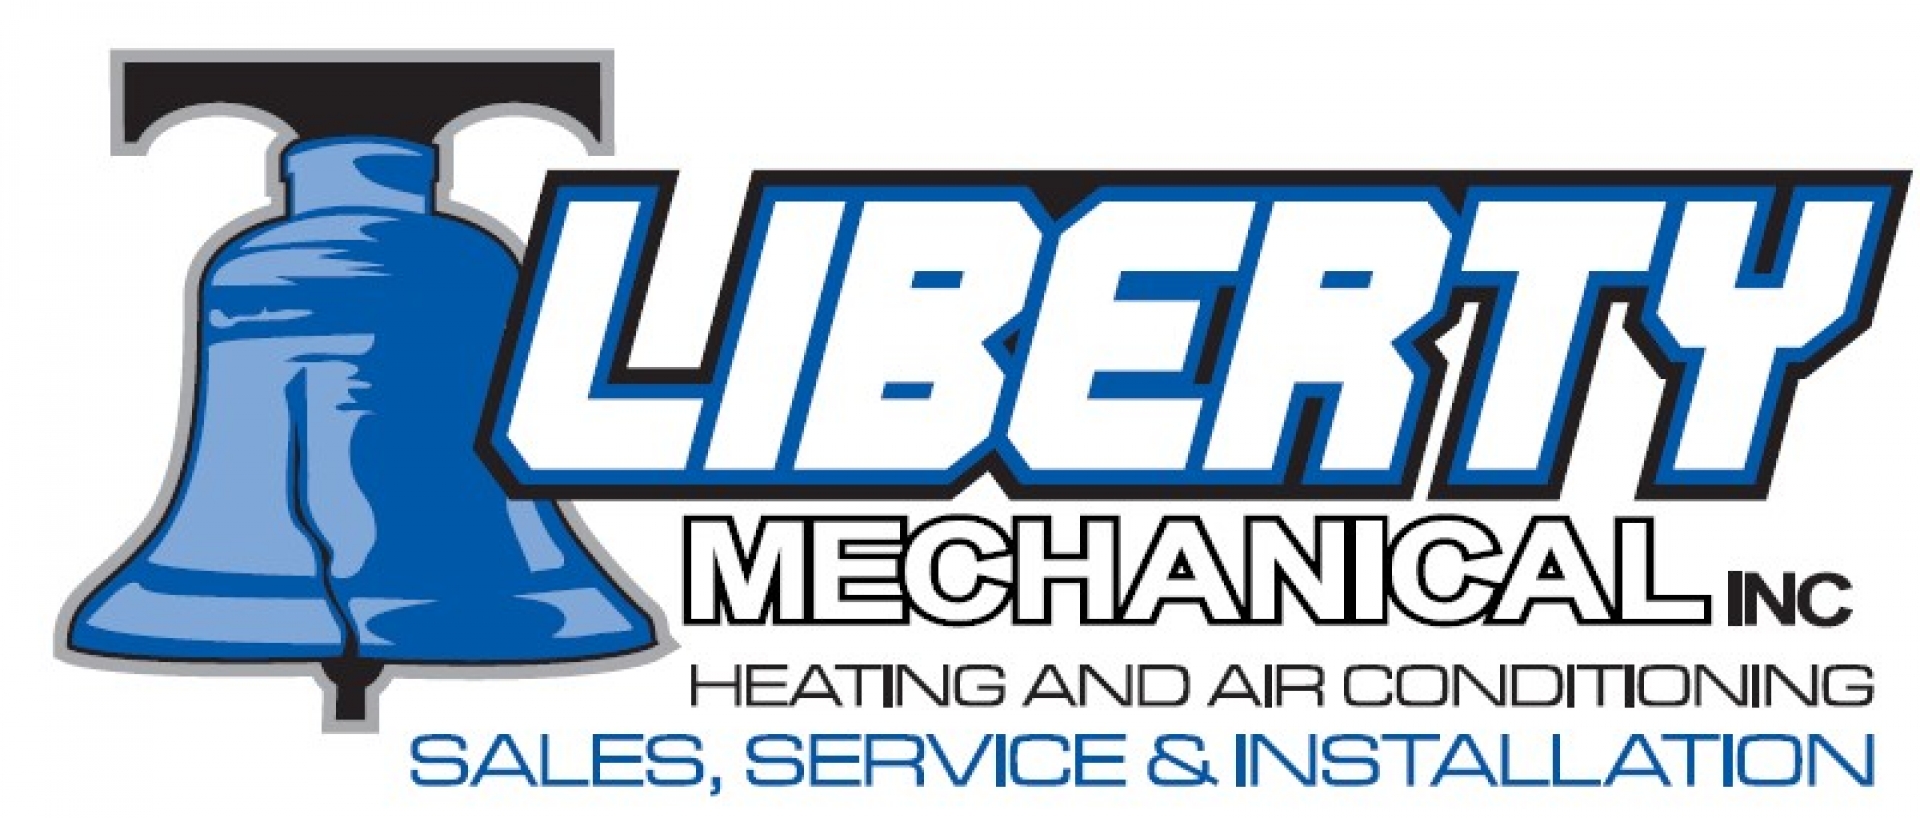 Liberty Mechanical Inc company logo